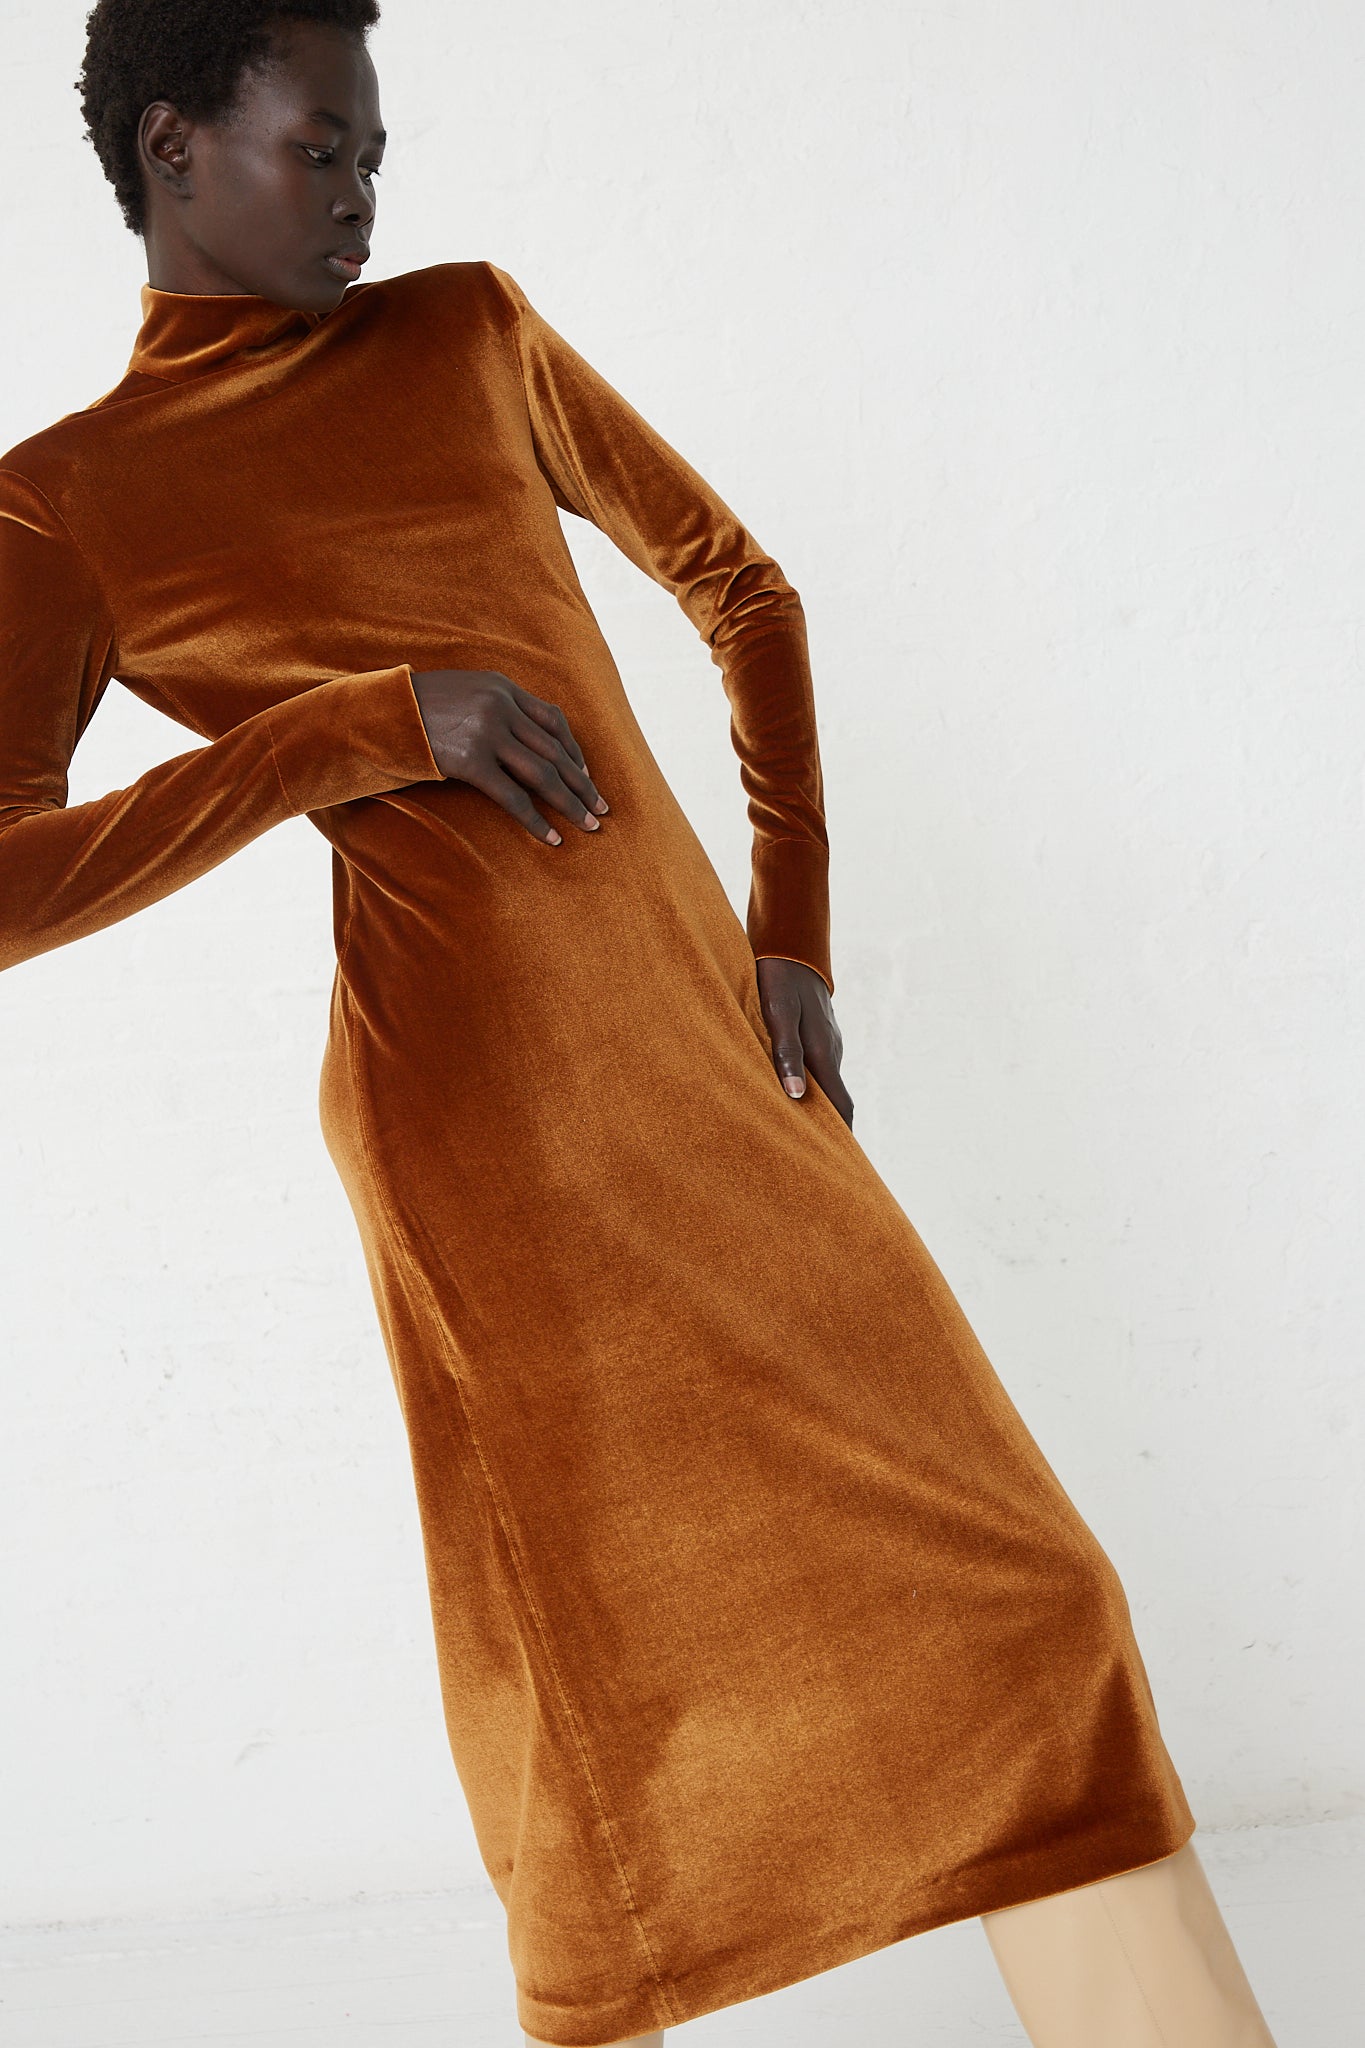 The model is wearing a Velvet Turtleneck Dress in Cognac by Veronique Leroy.